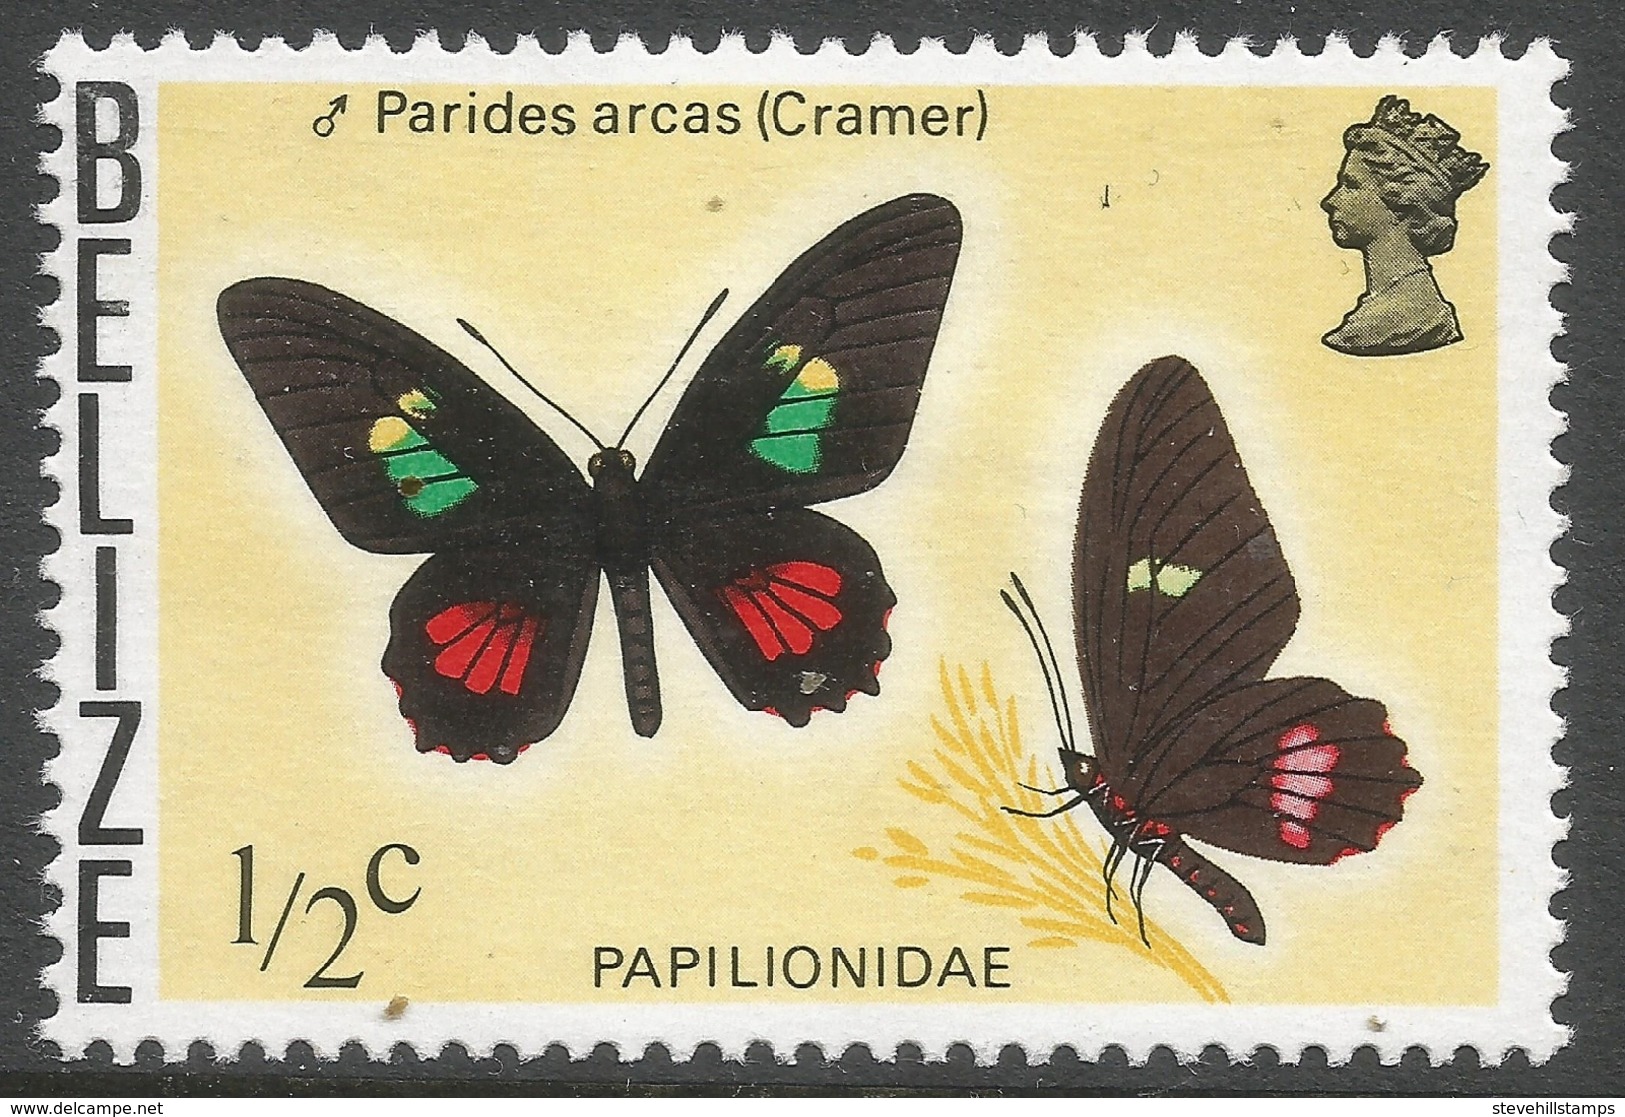 Belize. 1974 Butterflies Of Belize. ½c MH SG 380 - Belize (1973-...)